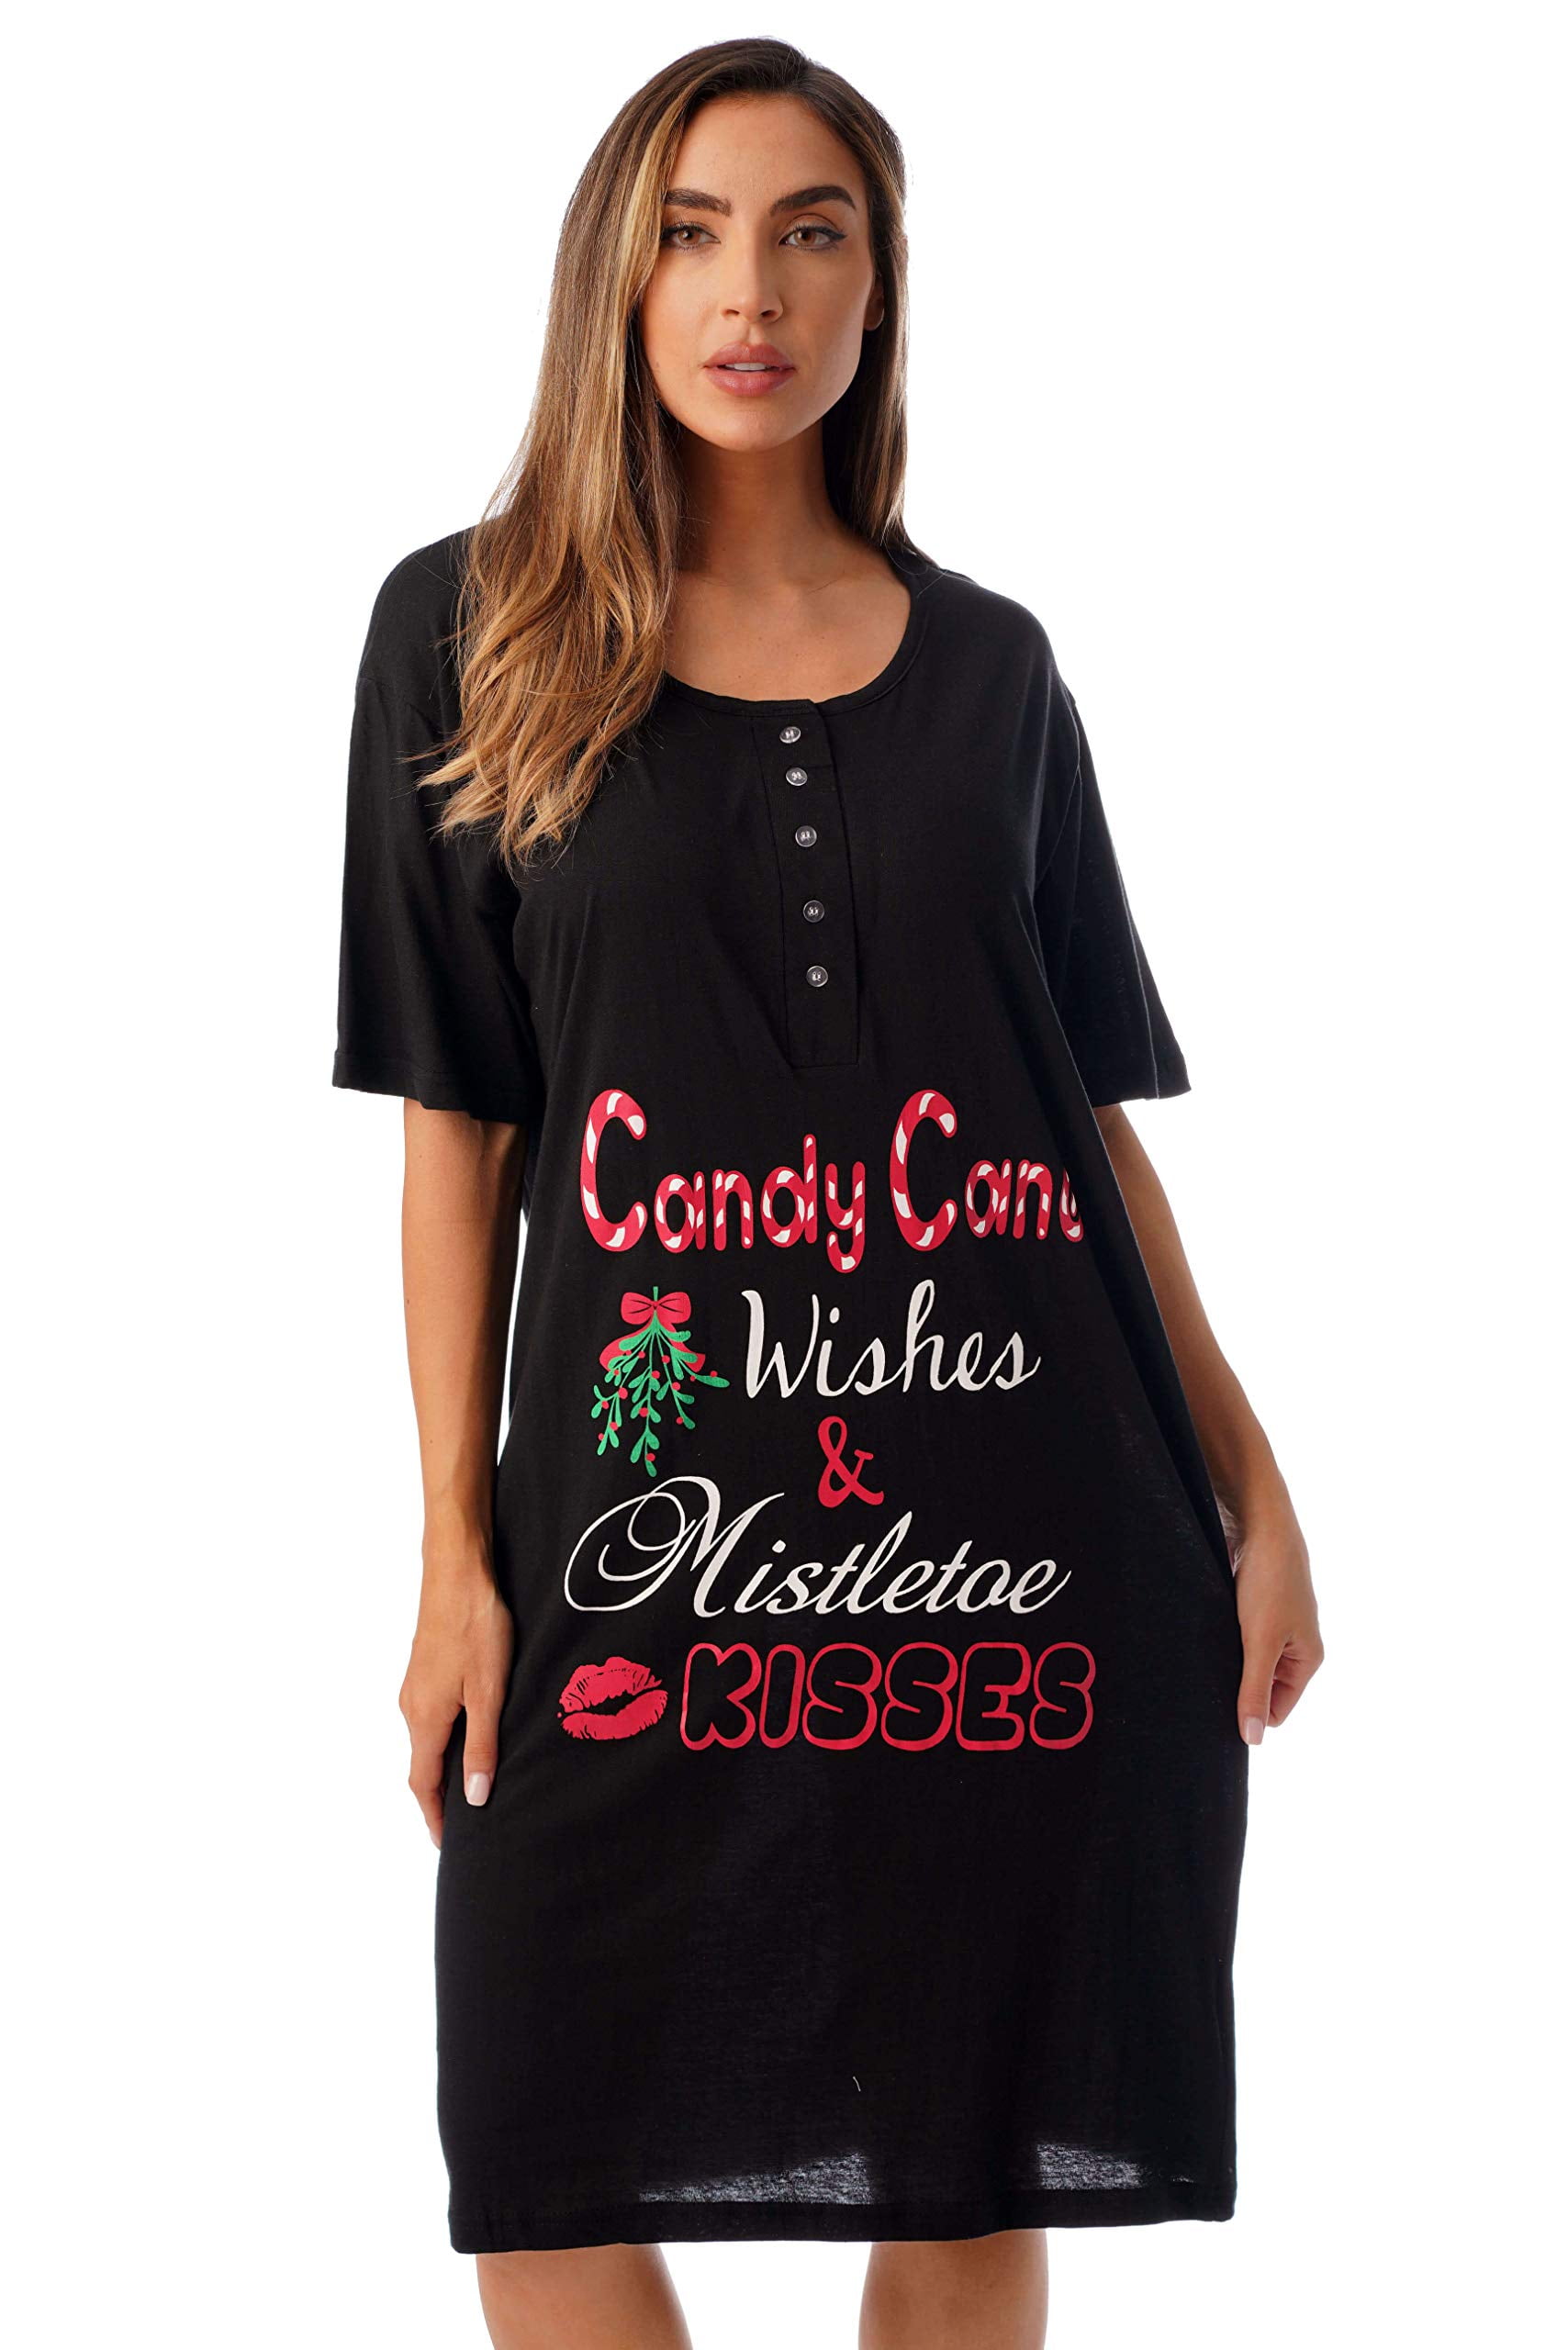 Just Love Short Sleeve Nightgown Sleep Dress For Women Sleepwear Black Candy Cane Wishes 